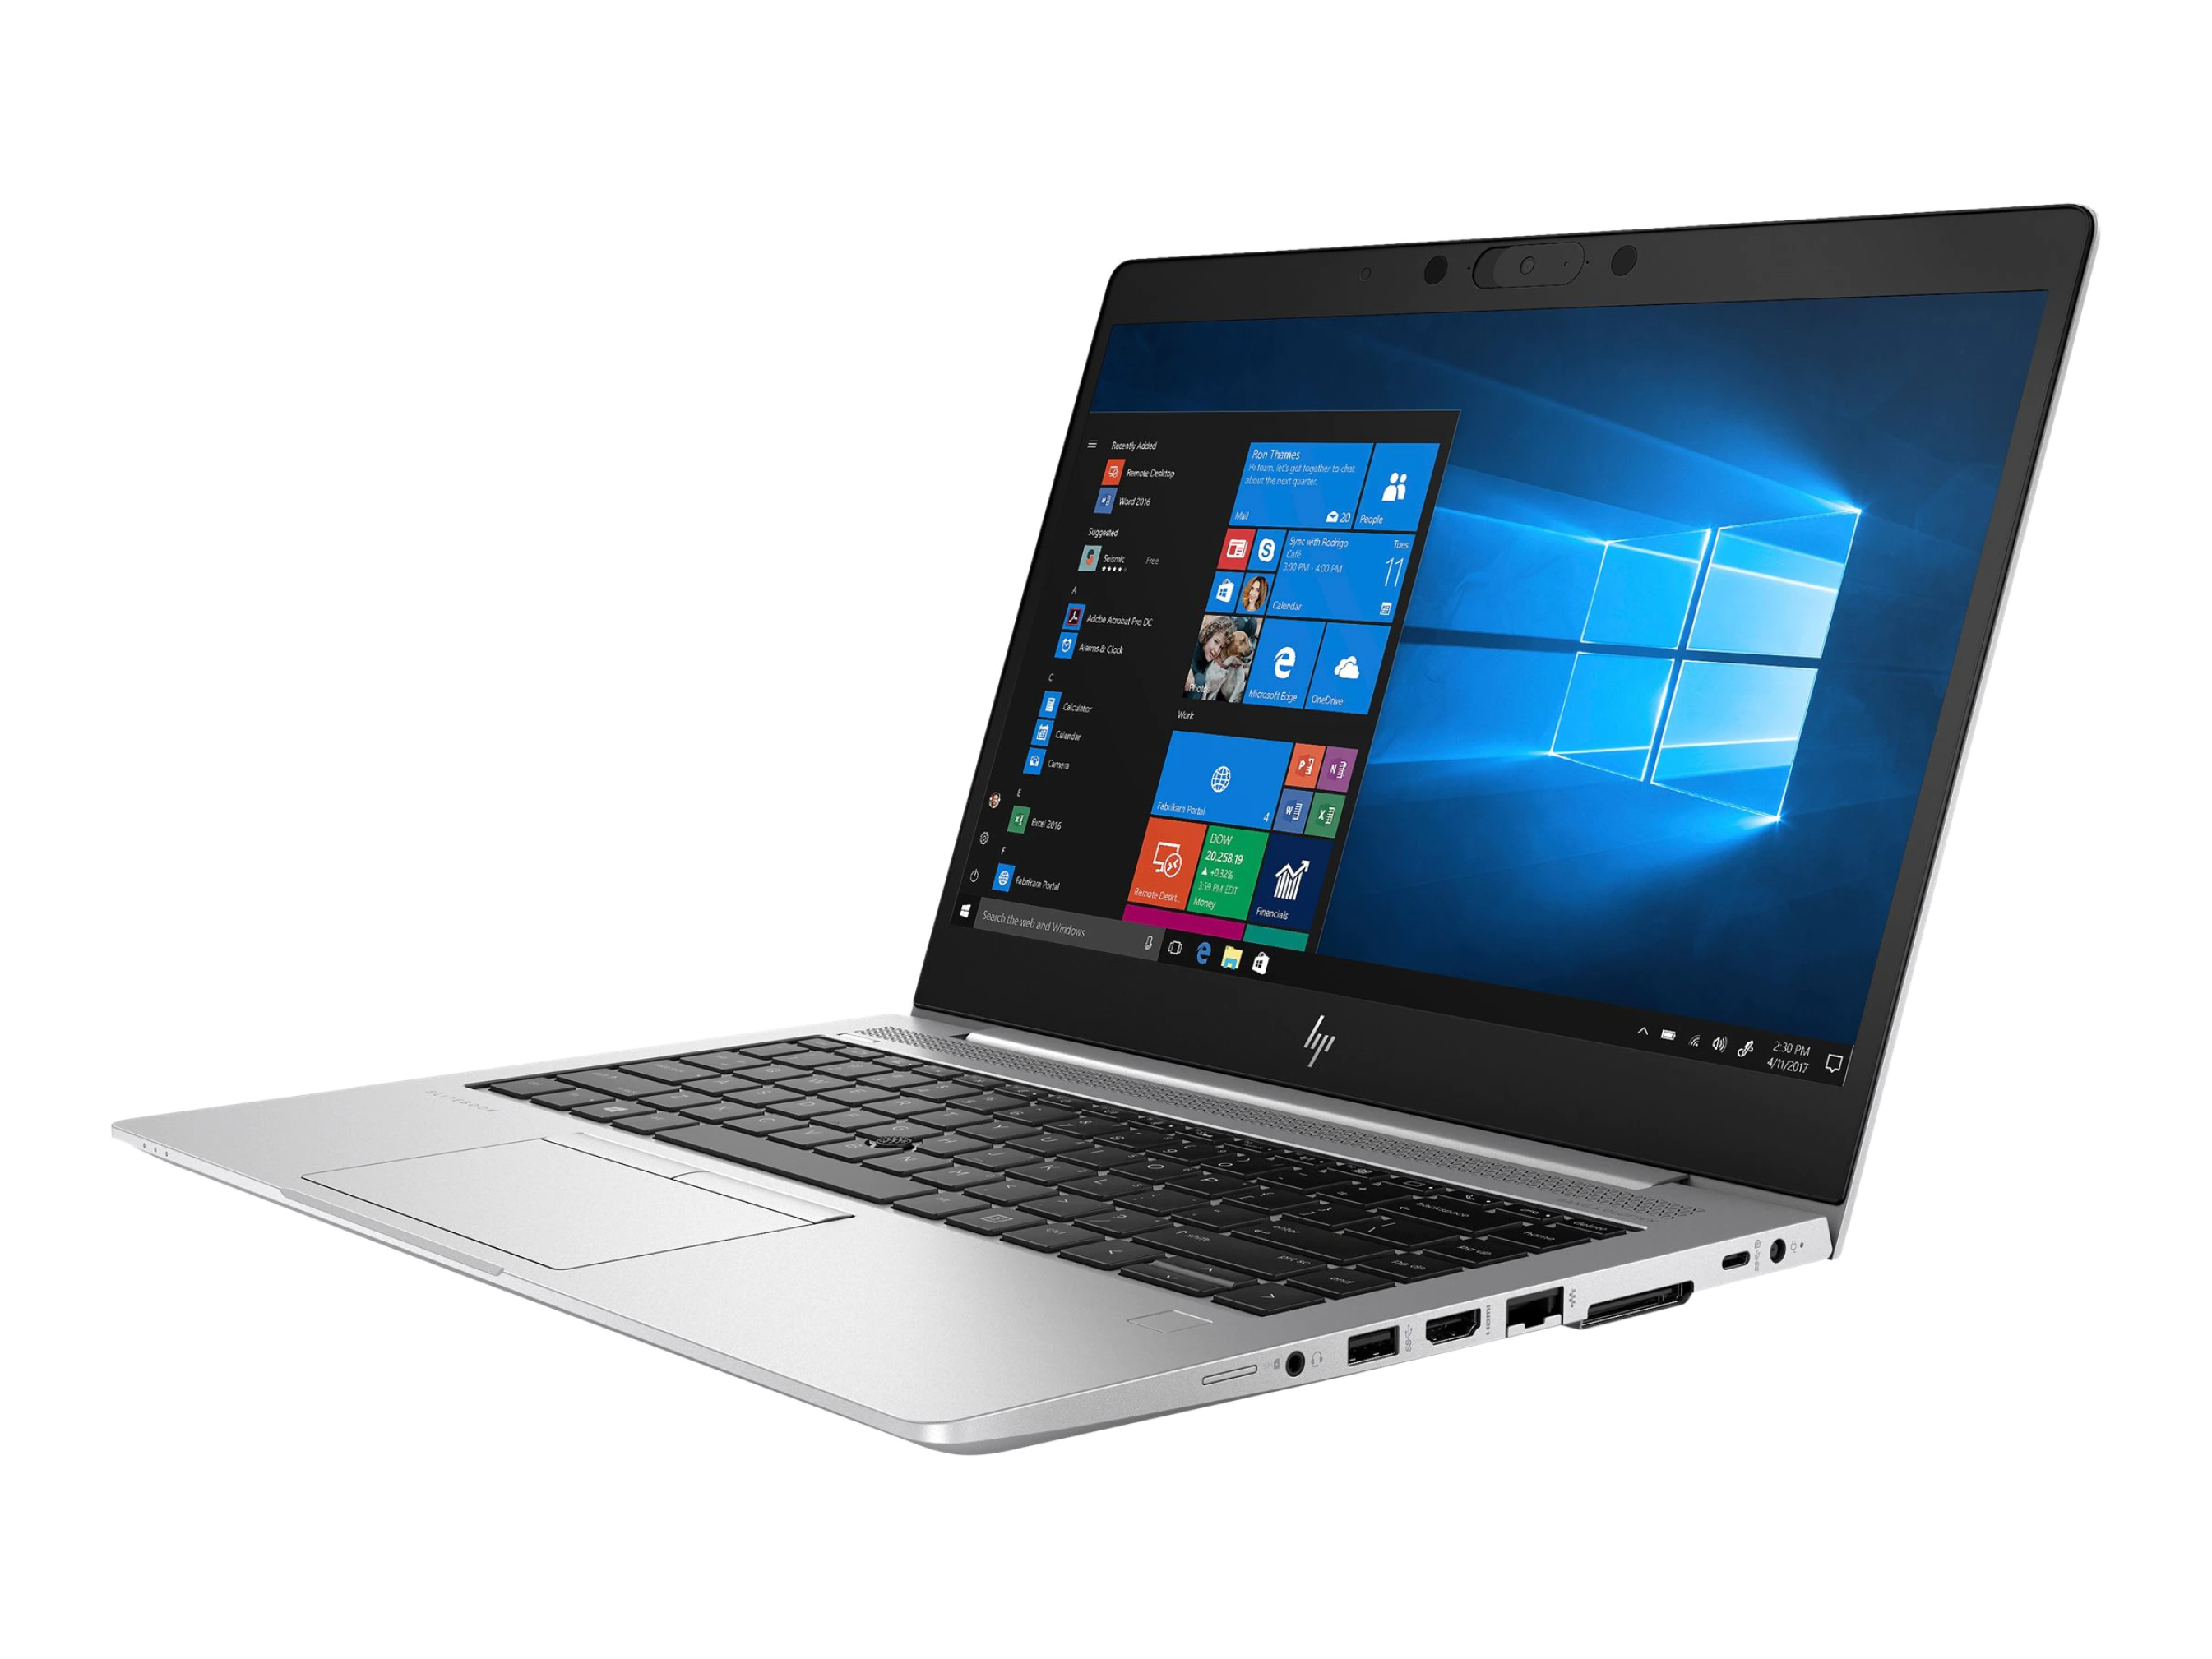  خرید و قیمت لپ تاپ اچ پی HP EliteBook 745 G6 Notebook | لاکچری لپ تاپ 